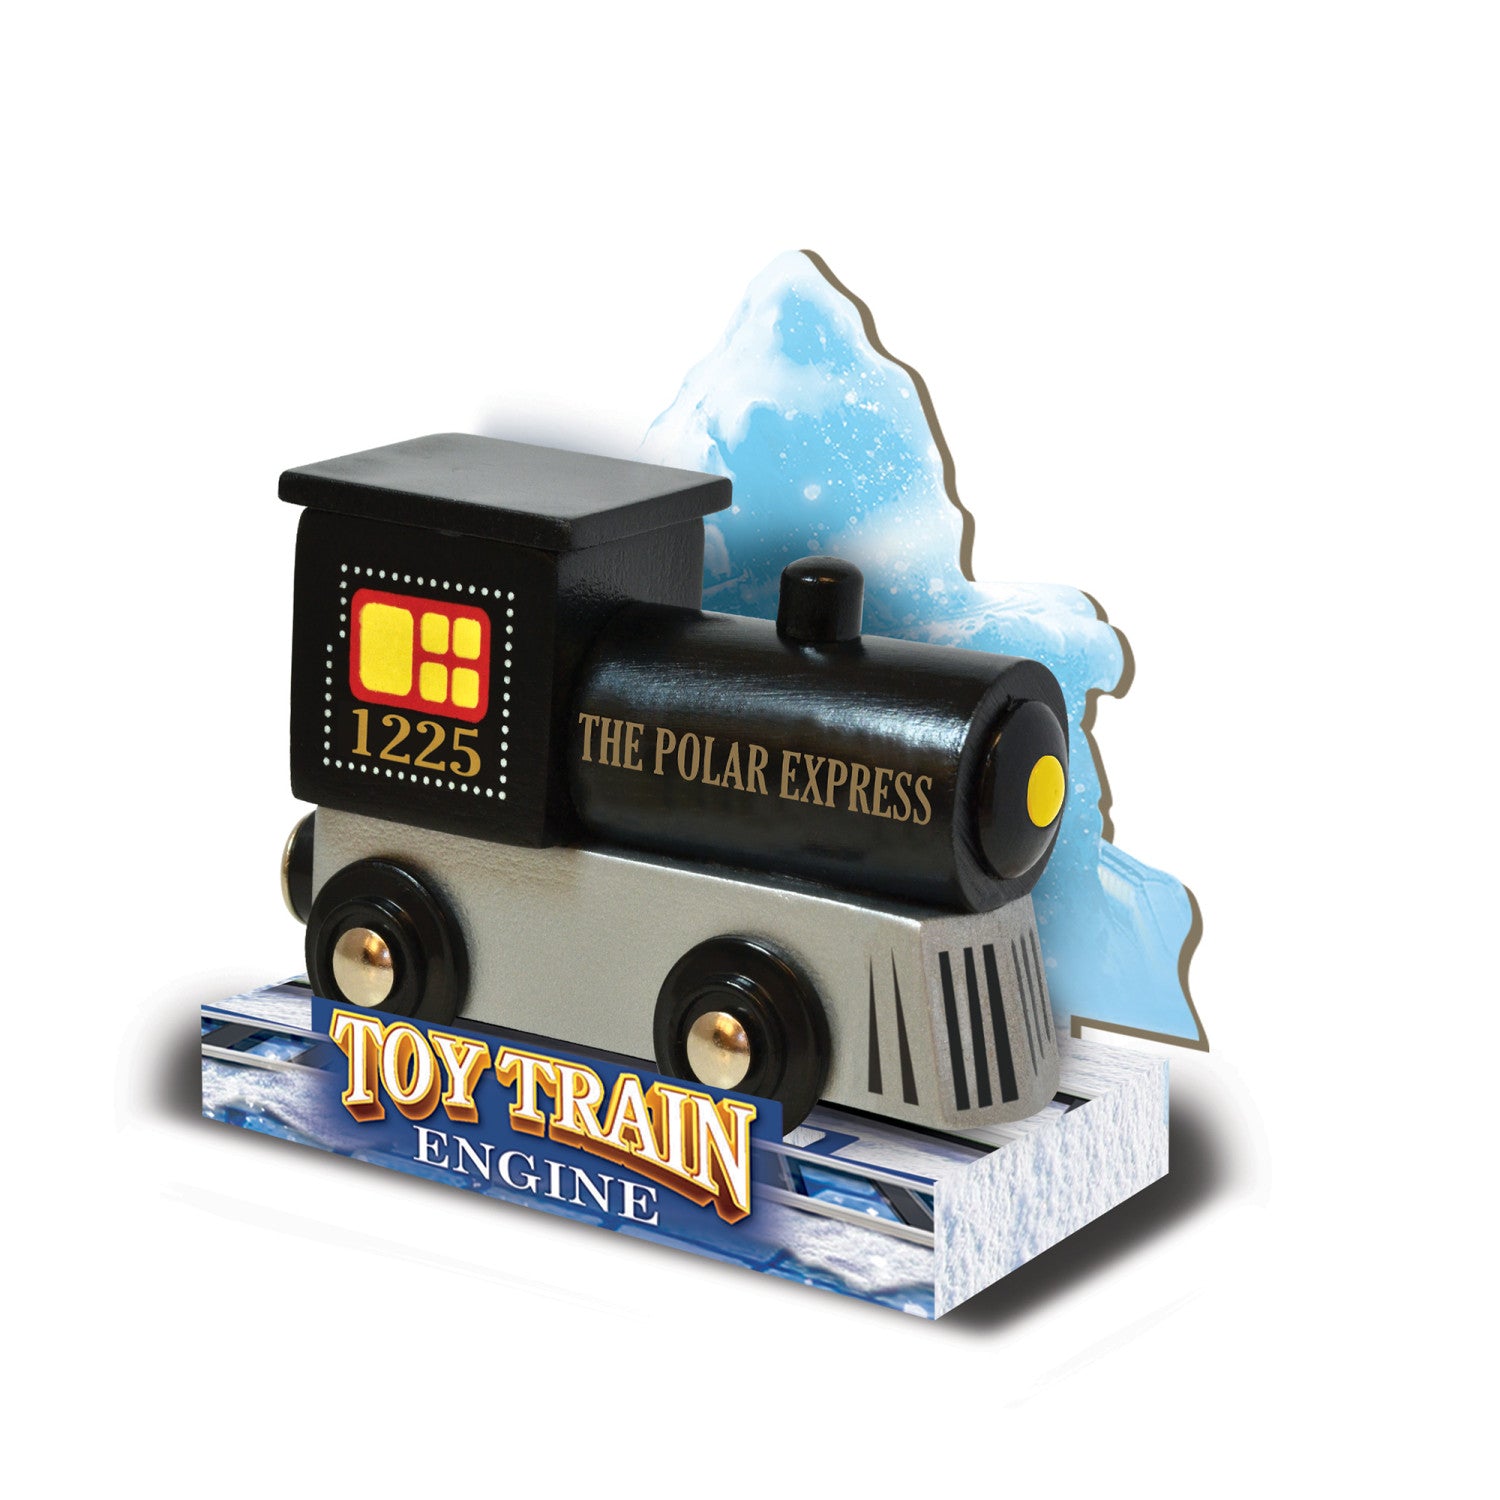 The Polar Express Toy Train Engine